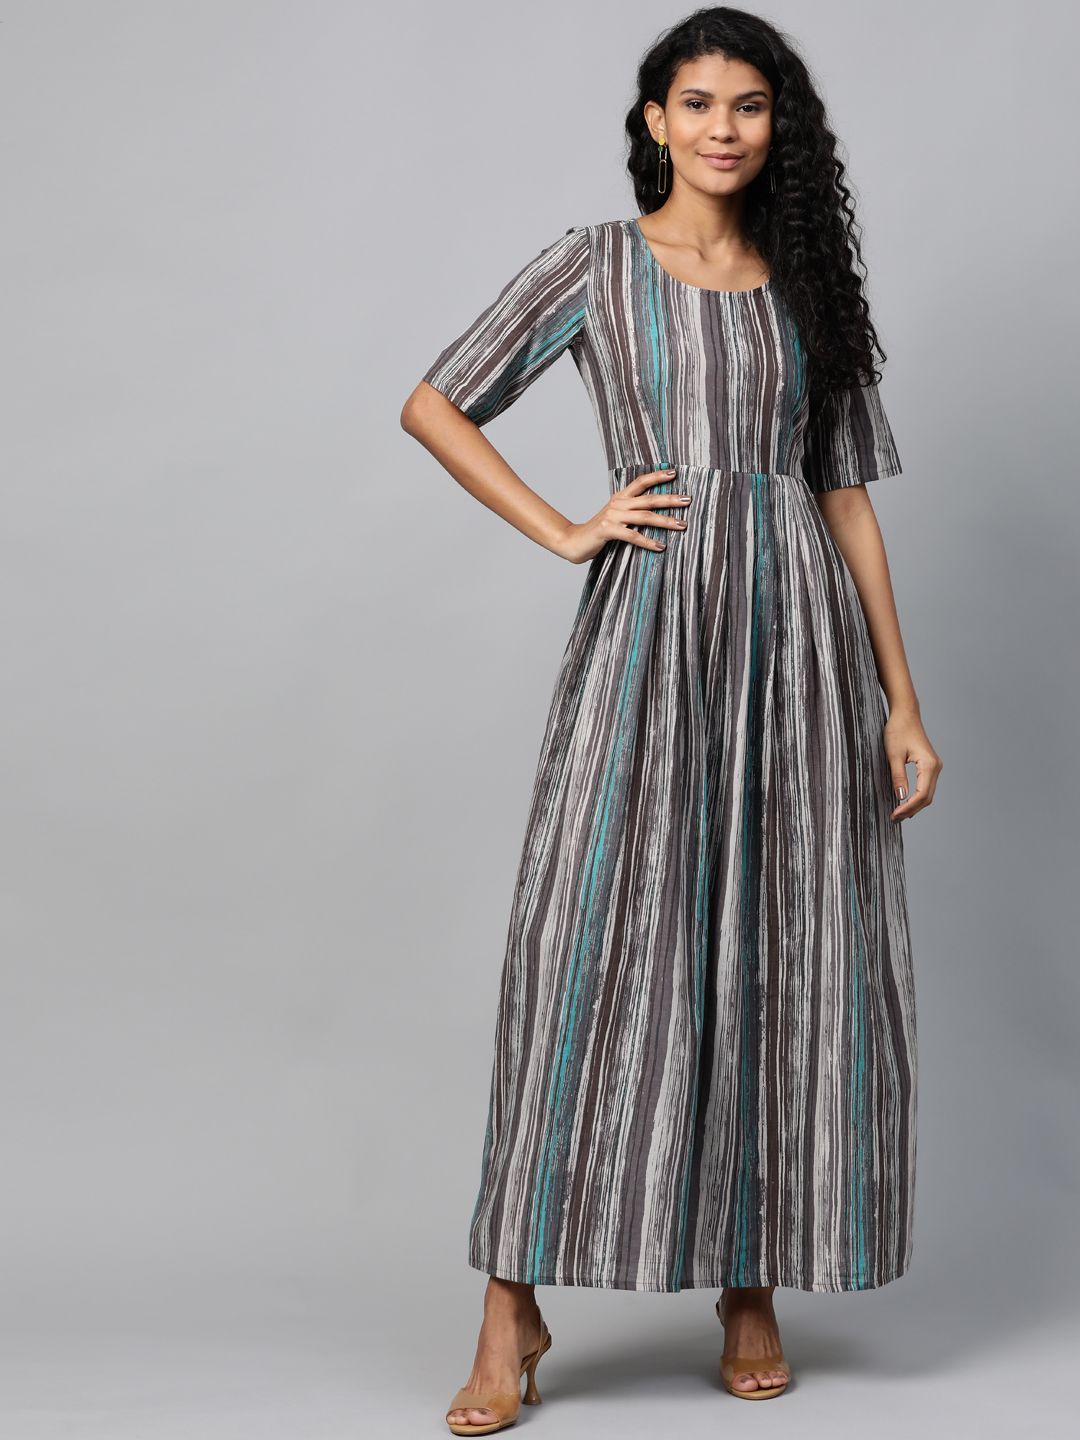 Idalia Women Grey & Off-White Striped Maxi Dress Price in India